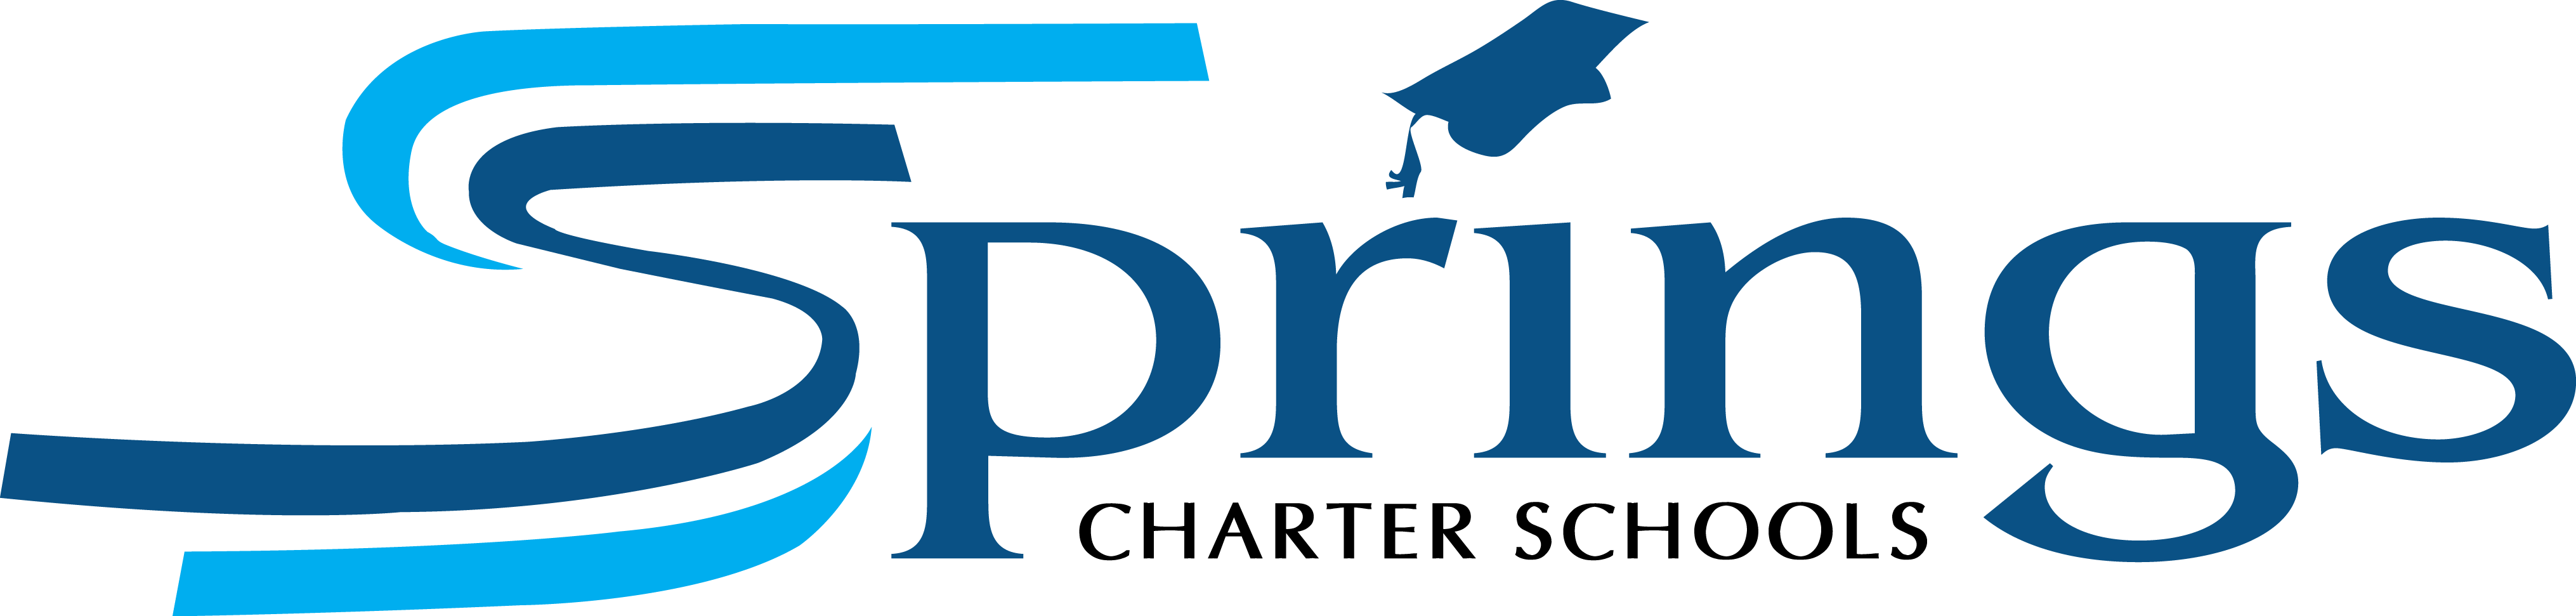 Charter Logo - The Logo - Springs Charter Schools